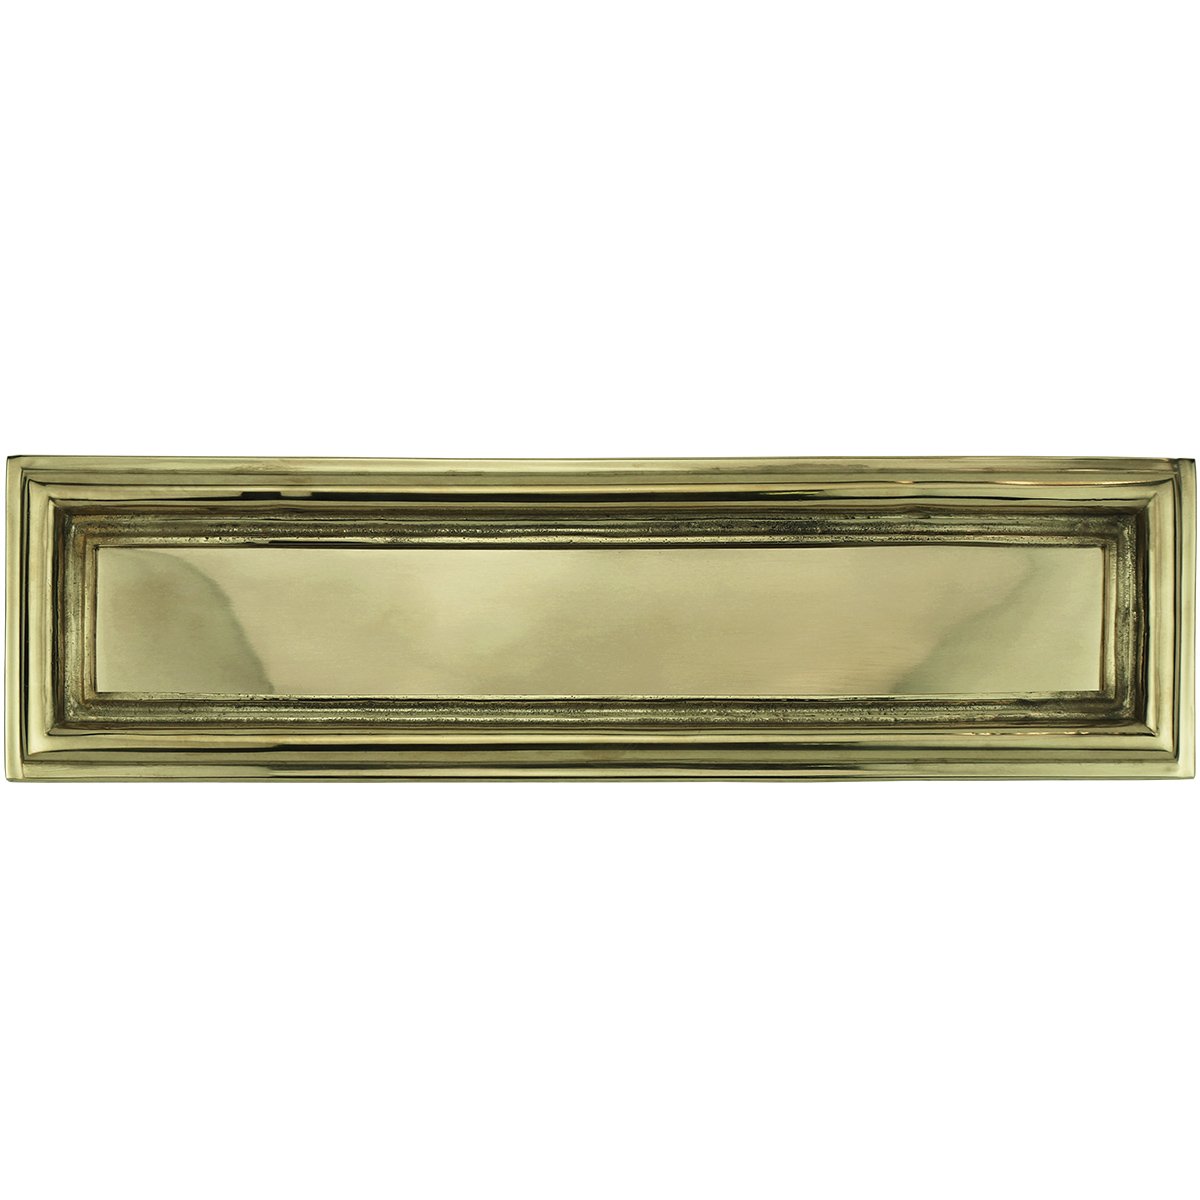 Letter plate polished brass Stapleford - 90 mm